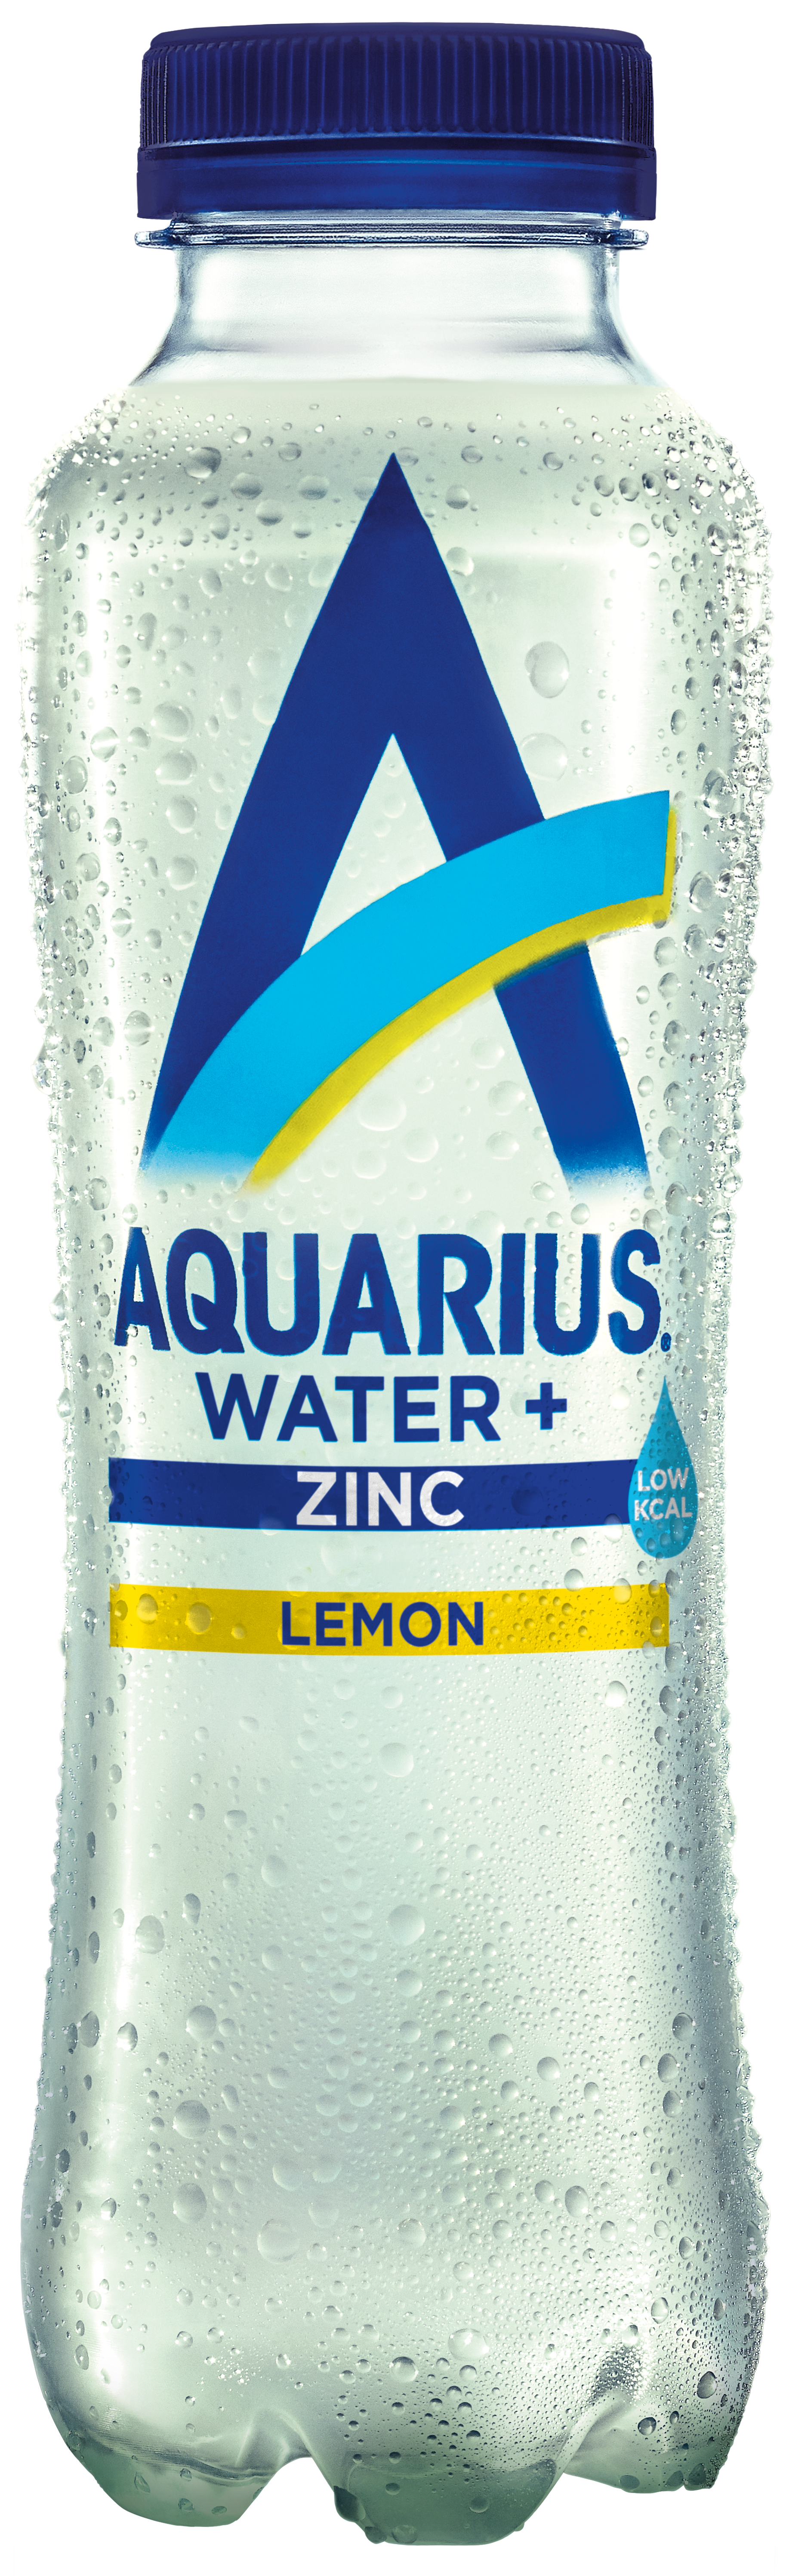 Aquarius-Lemon